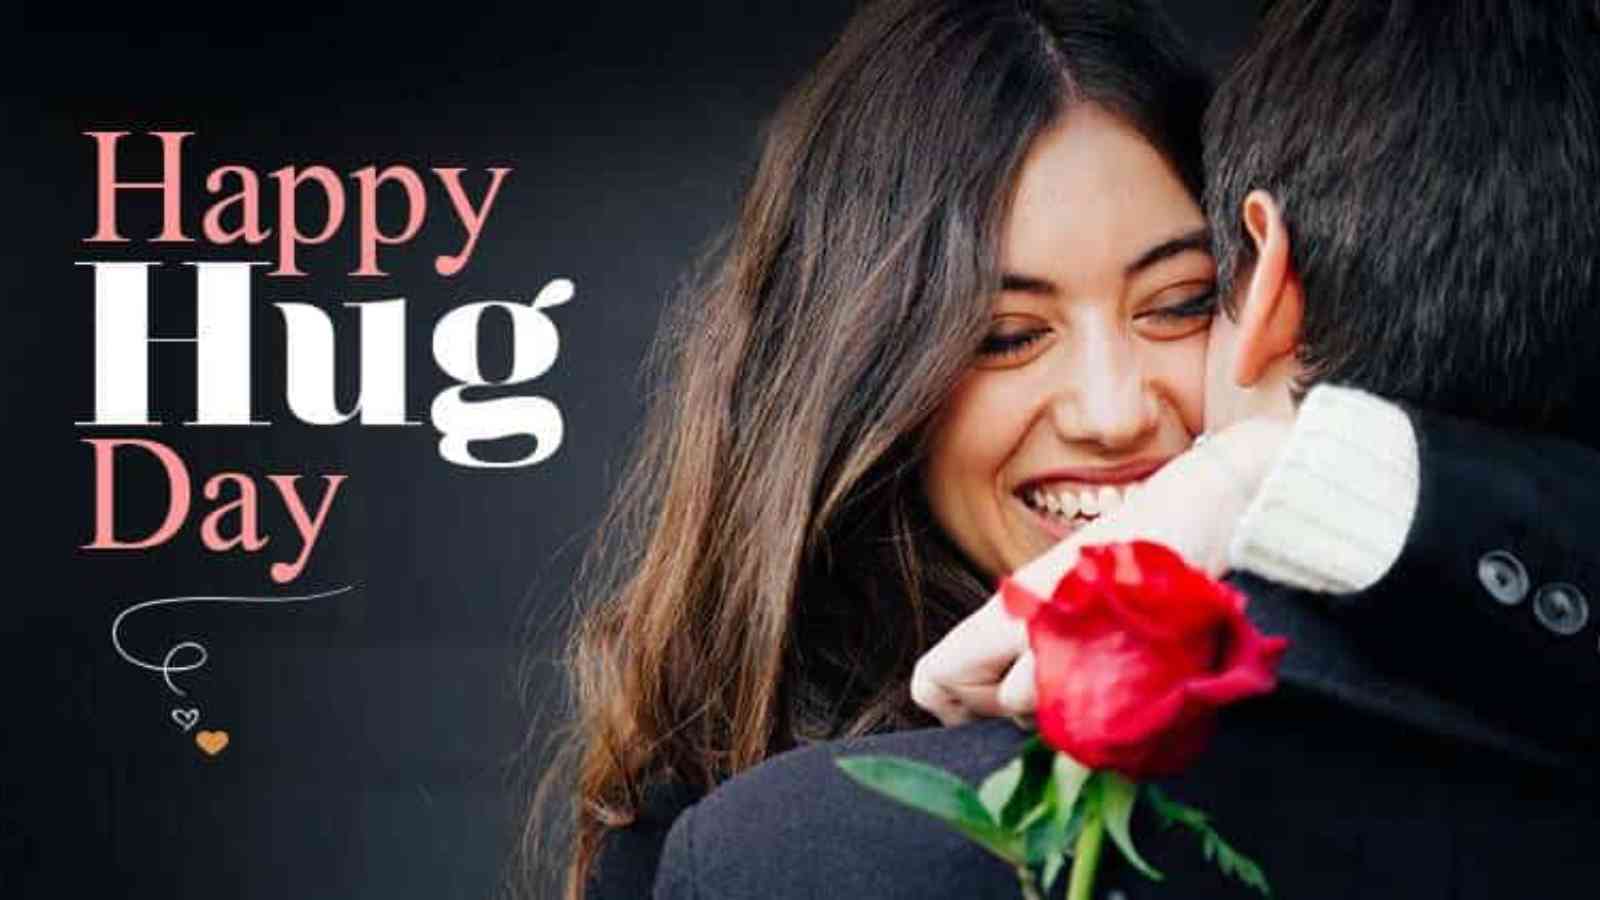 Happy Hug Day Messages for Boyfriend on Valentine's Day